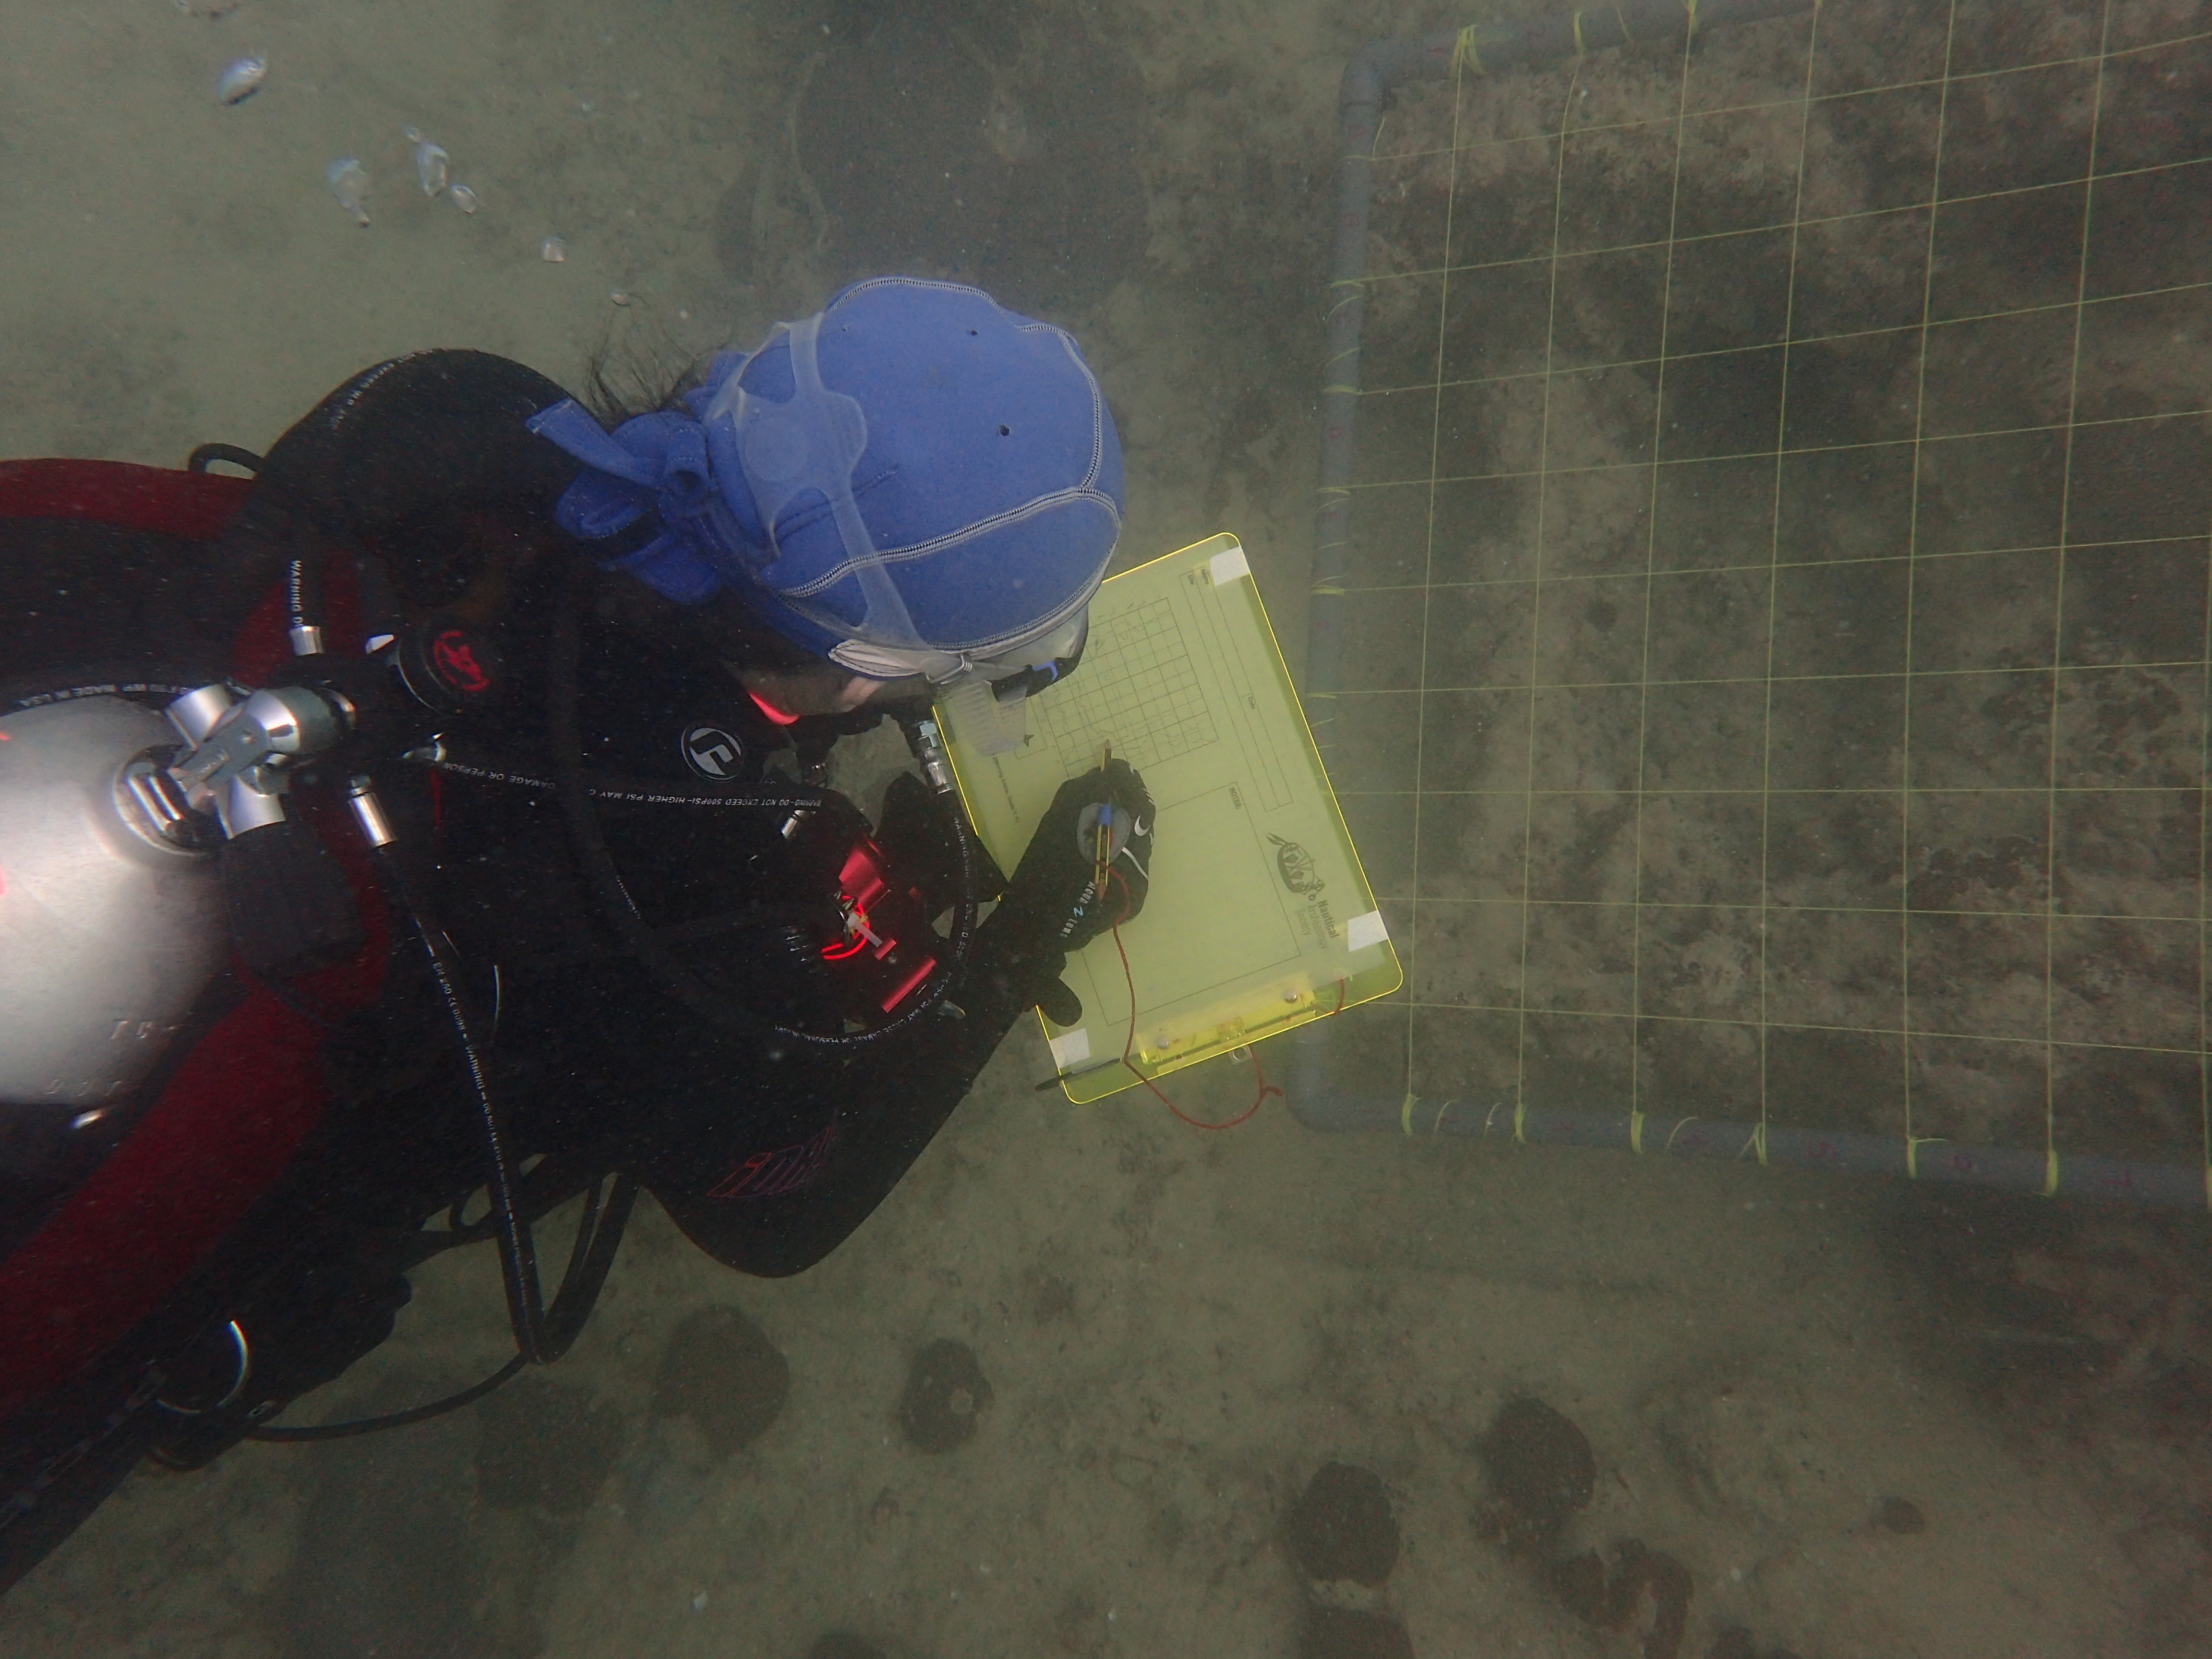 Surveying an underwater wreck in Abu Dhabi